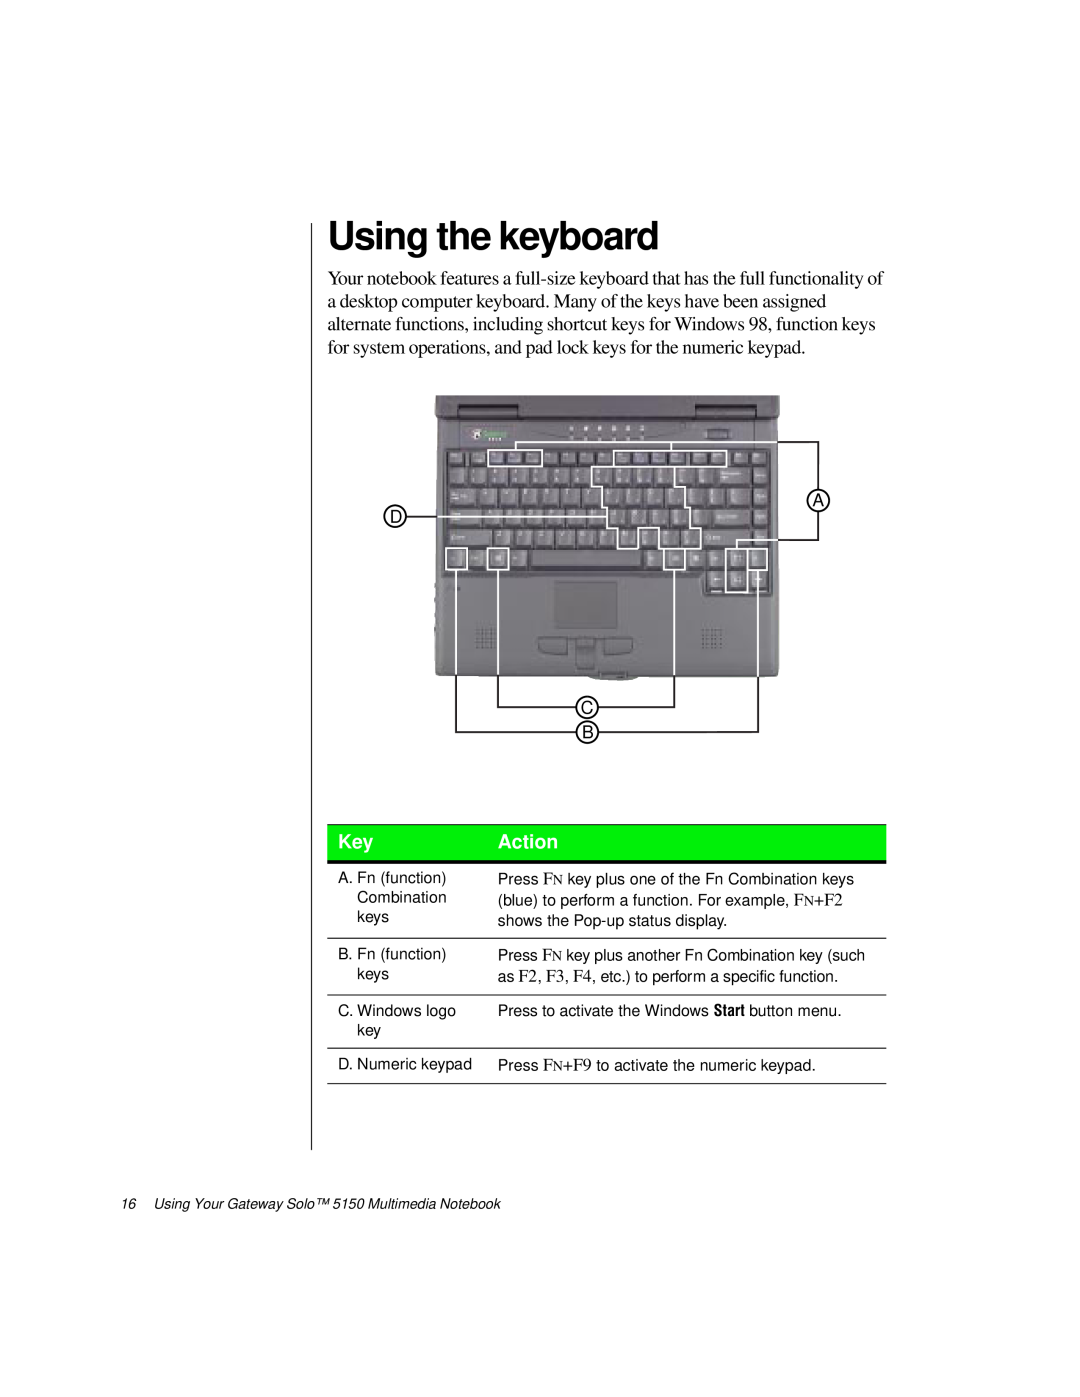 Gateway TM 5150 manual Using the keyboard, Action 